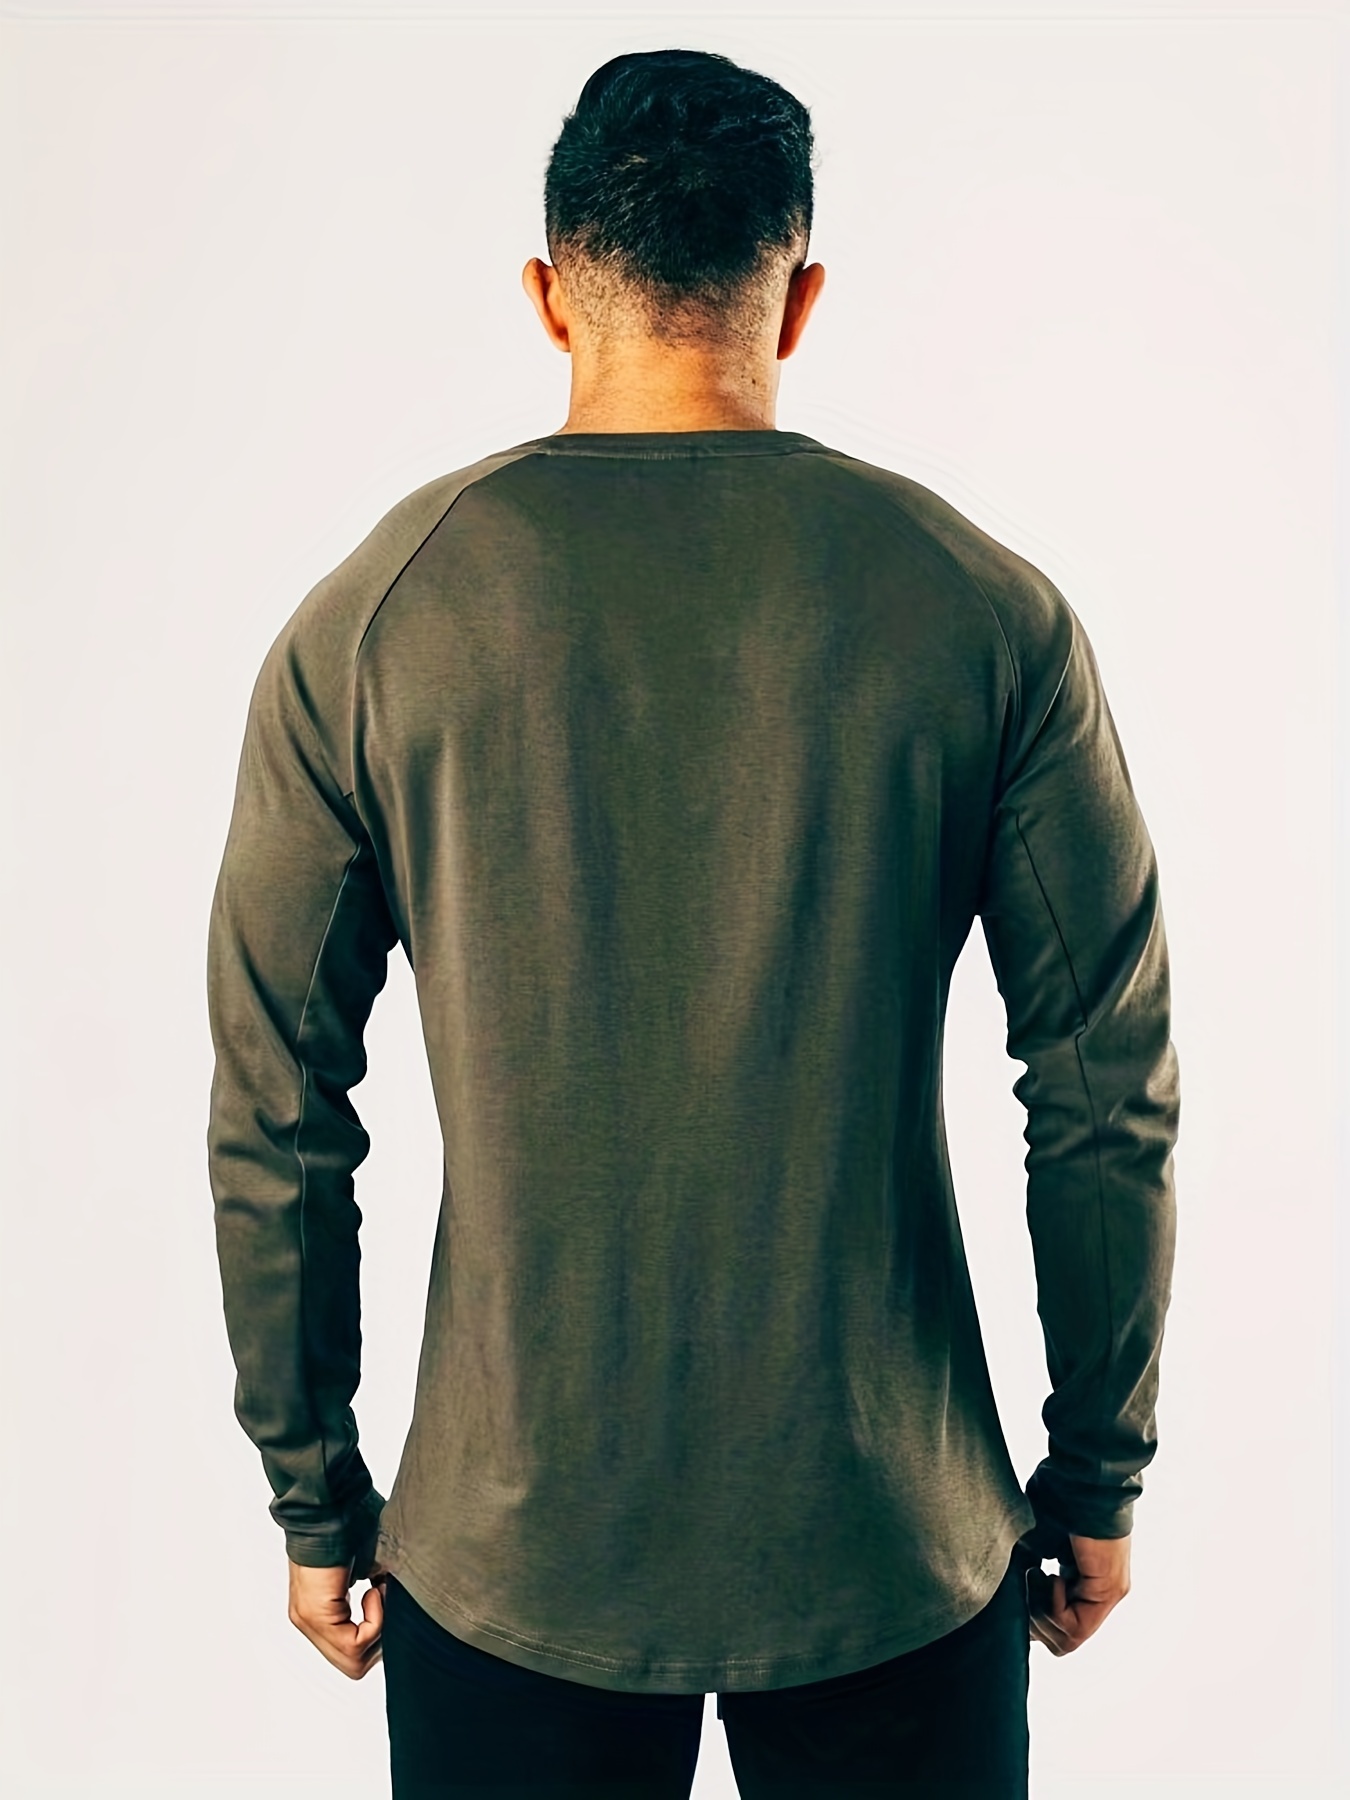 Men's Long Sleeve Outdoor Cotton Washed Shirt Military Style Plus Sizes  Shirts Graphic T Shirt Men Khaki XX-Large